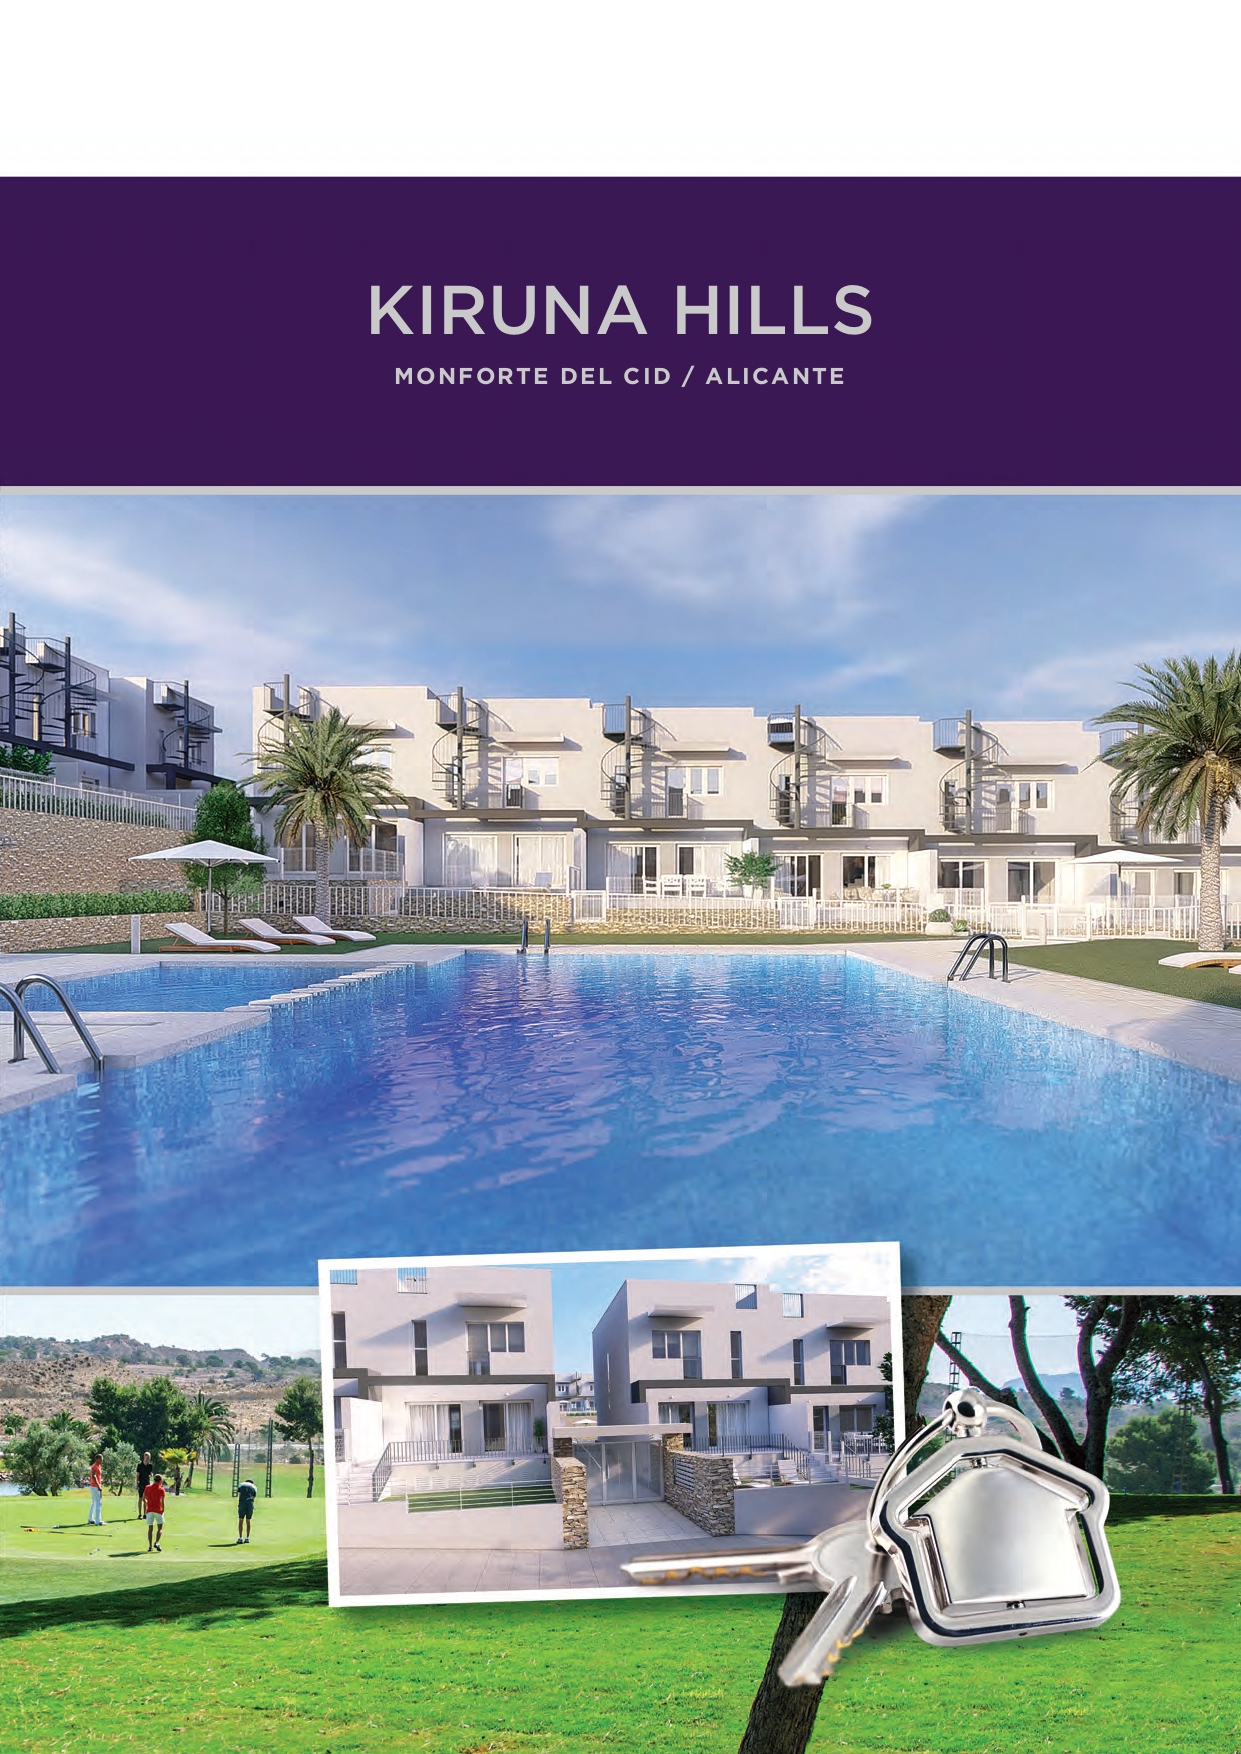 KIRUNA HILLS